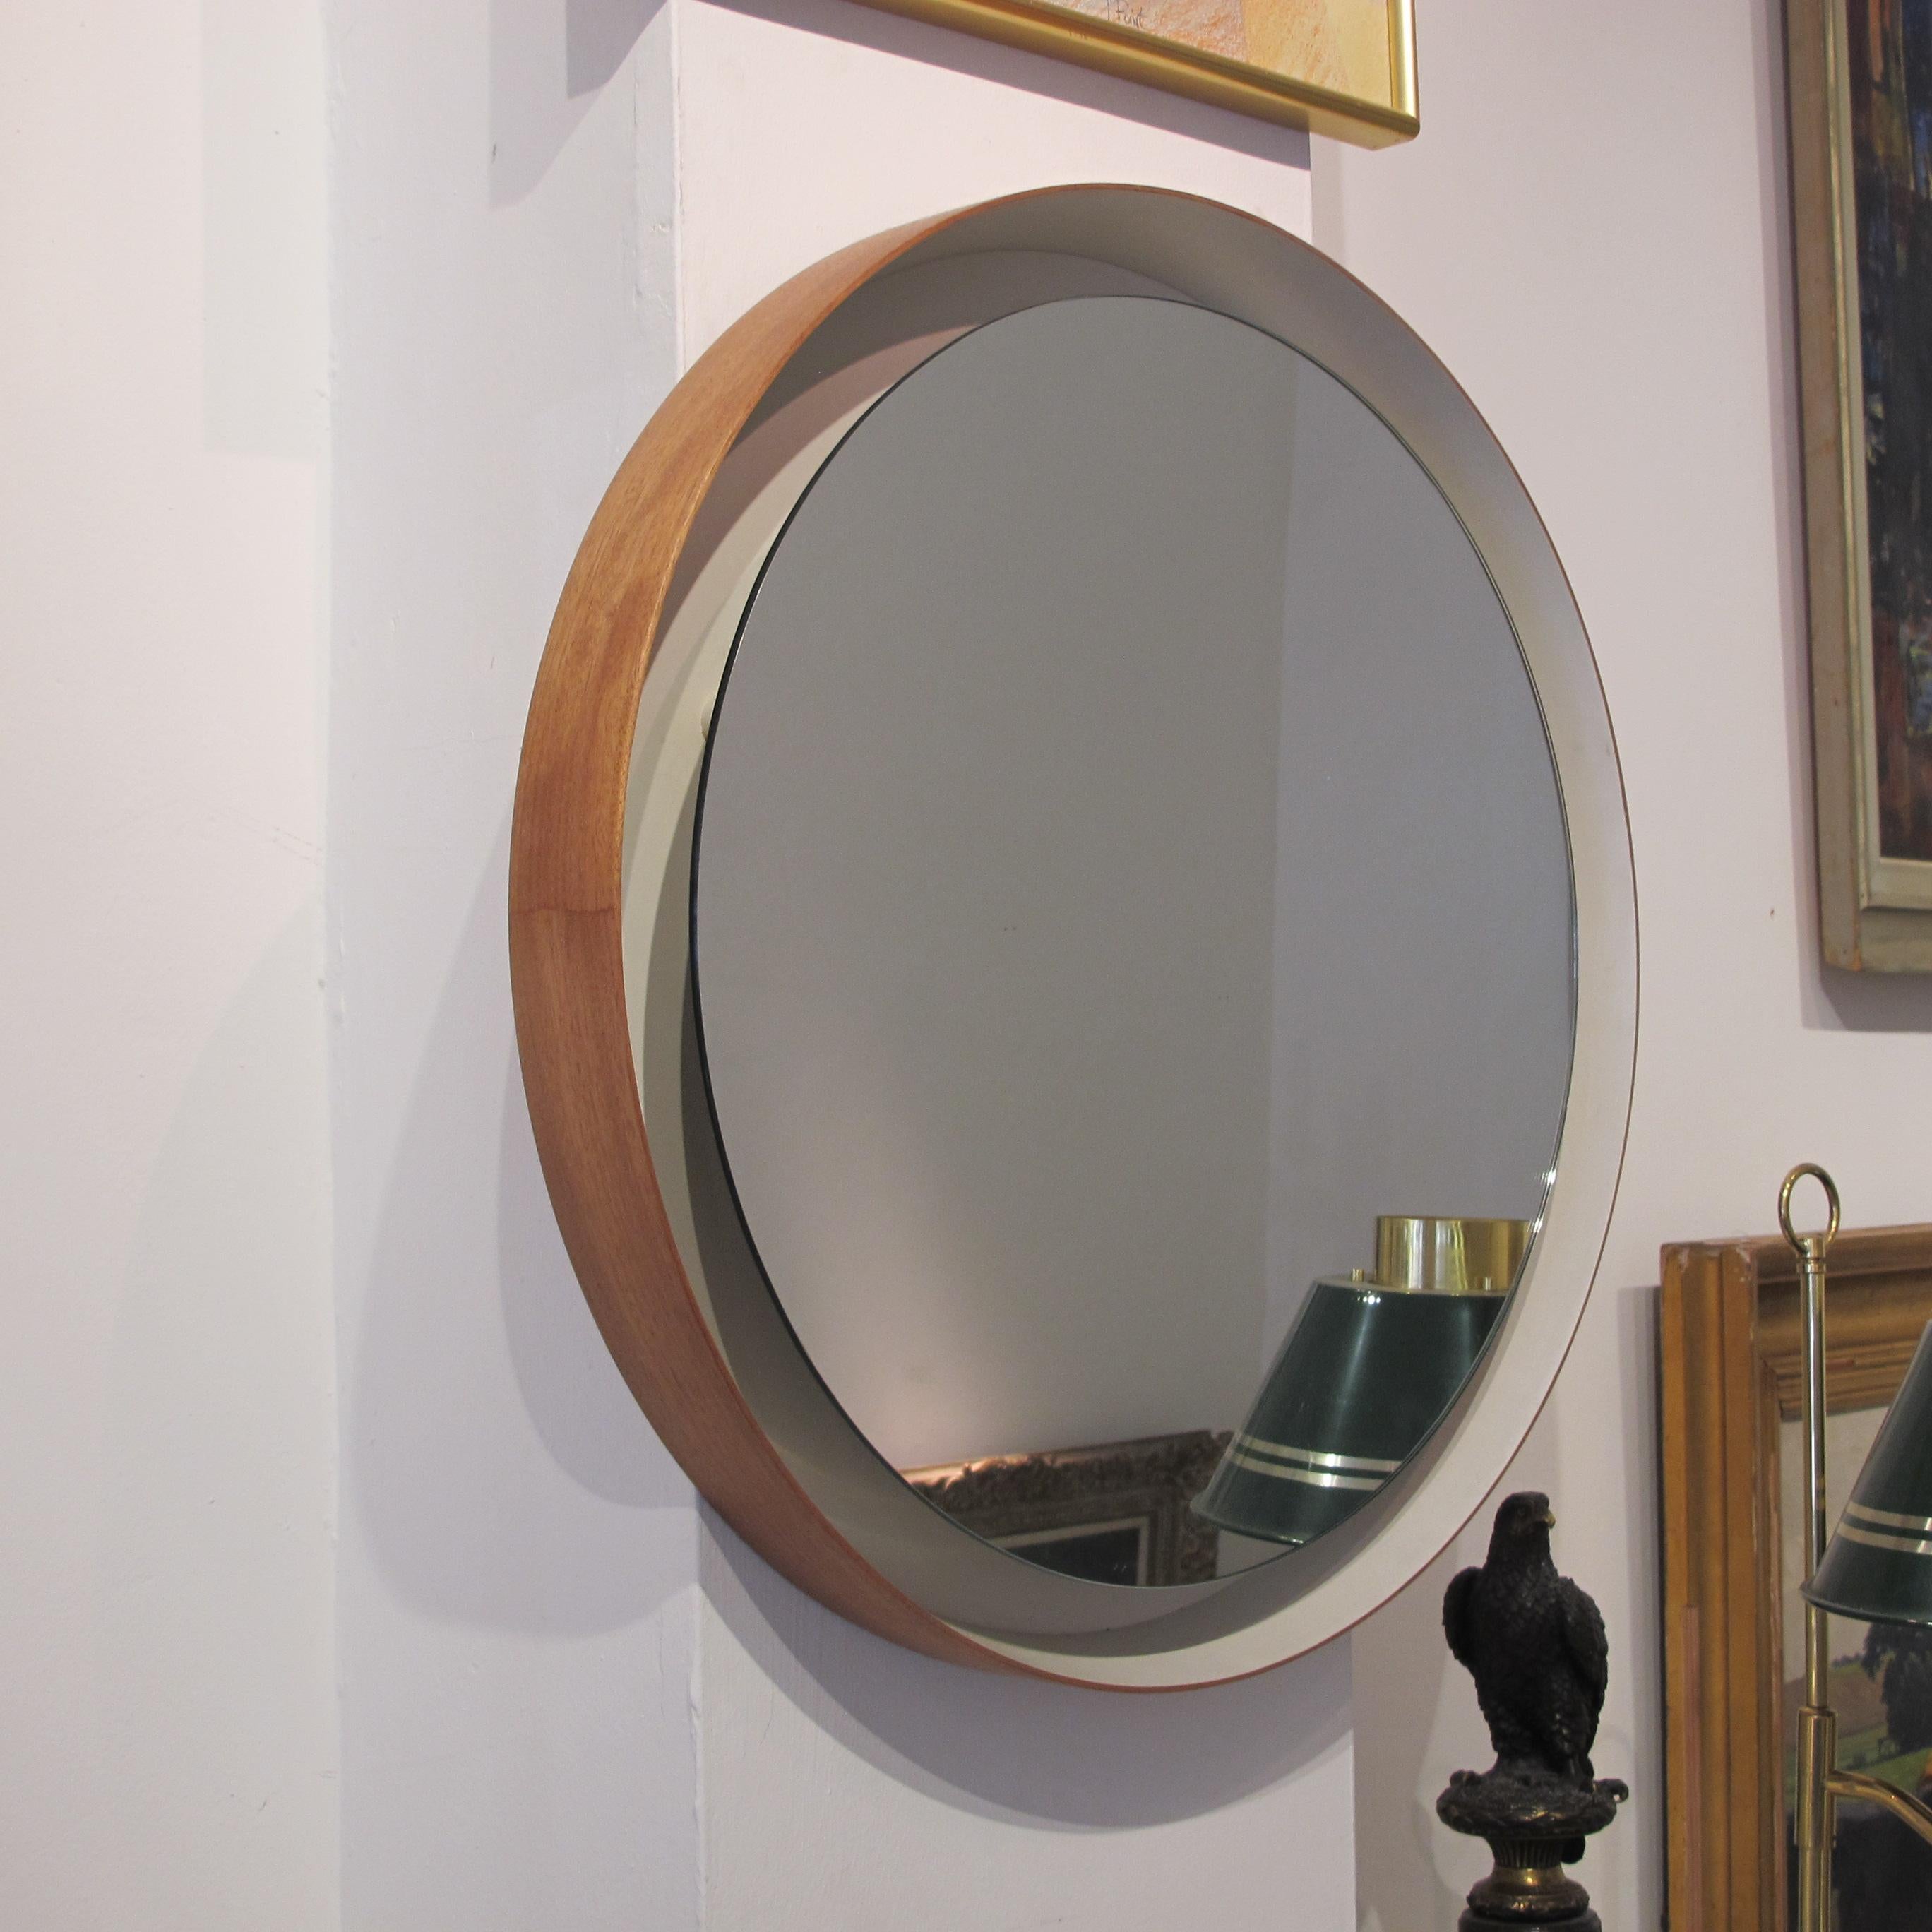 1960s Belgian Wall Mounted Modernist Round Backlit Illuminated Wood Frame Mirror 2